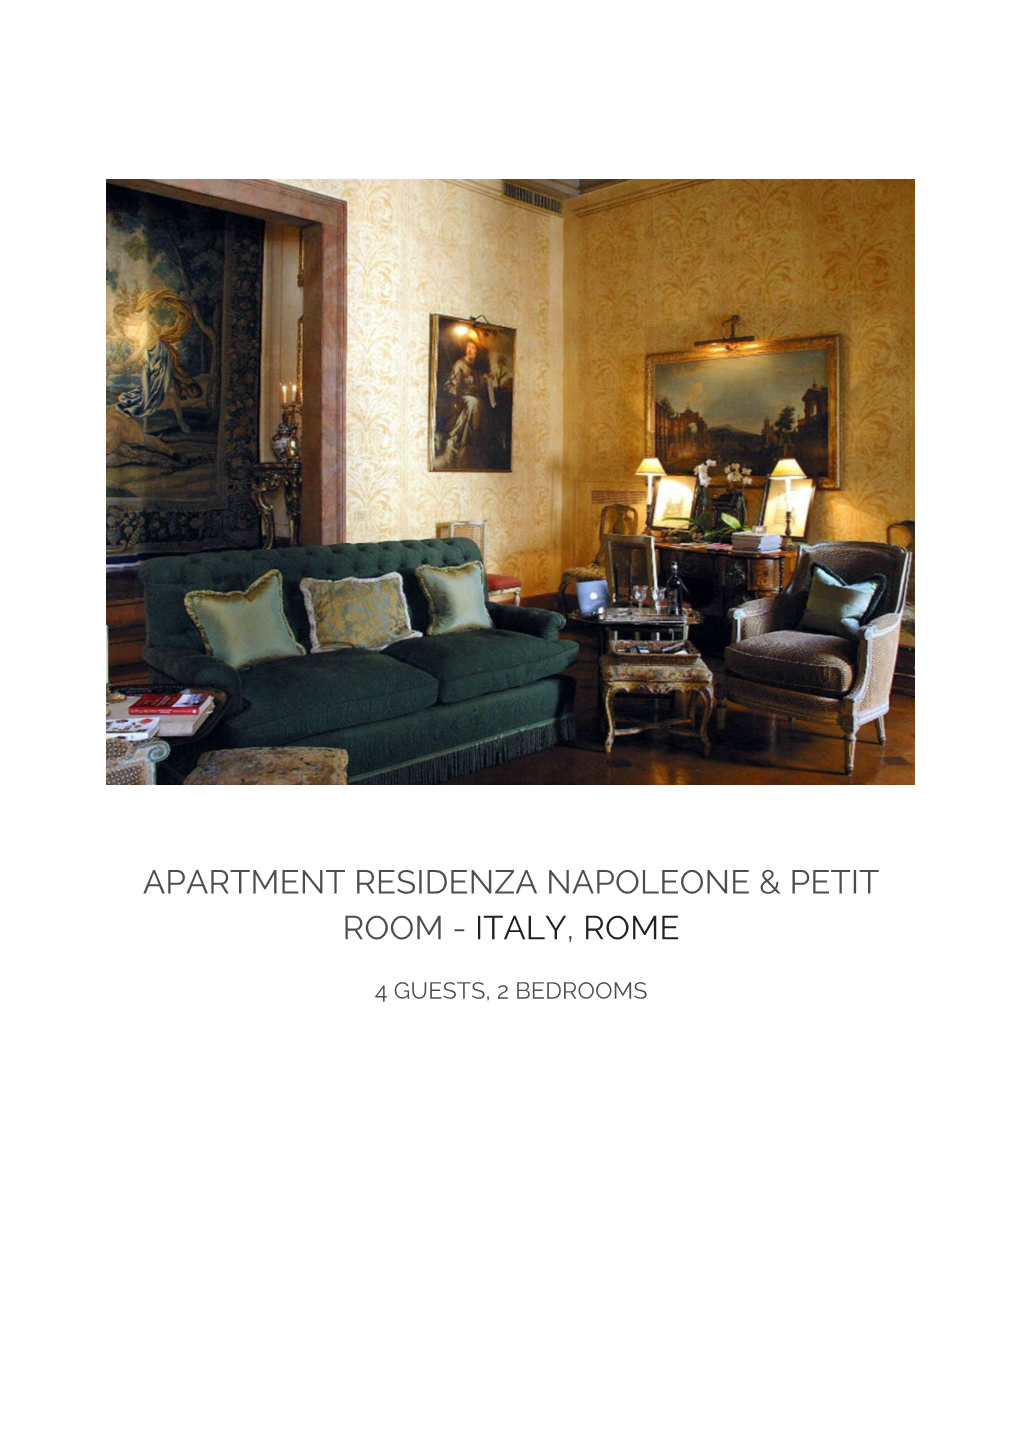 Apartment Residenza Napoleone & Petit Room - Italy, Rome